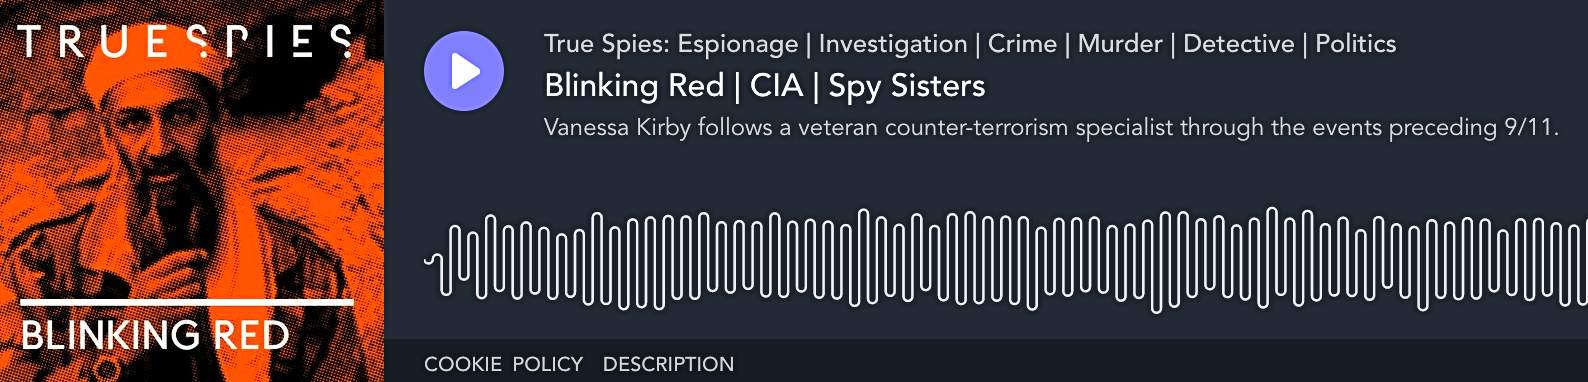 Listen to former CIA Analyst Gina Bennett in True Spies podcast Blinking Red